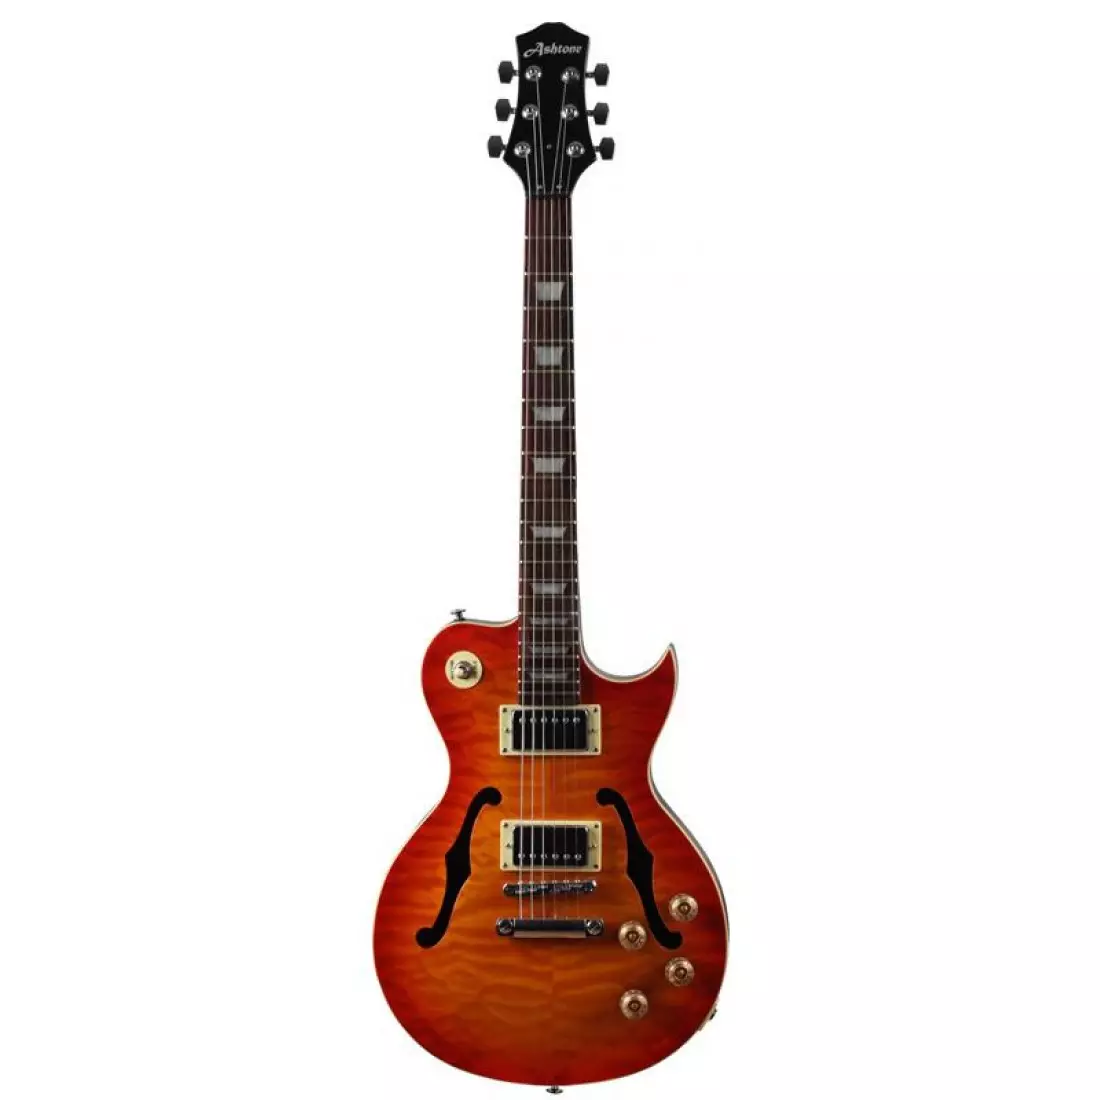 Ashtone gitare: Električna gitara ST-200 BLS i ST-100 BL, Bas-gitara AB-11 BK i AB-12 BK, AB-10 BK i drugi modeli 27108_6